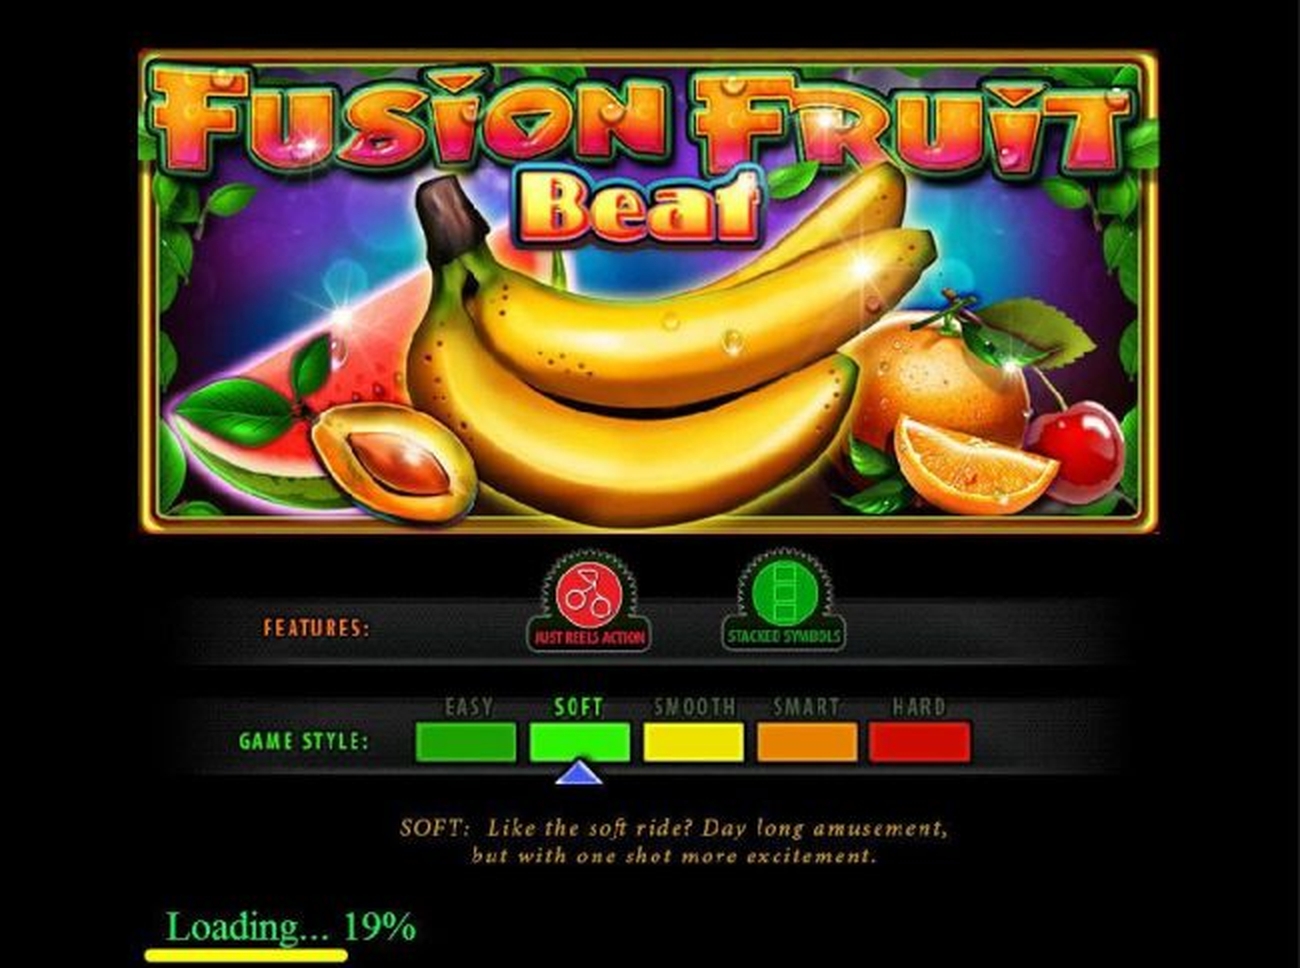 Fusion Fruit Beat demo